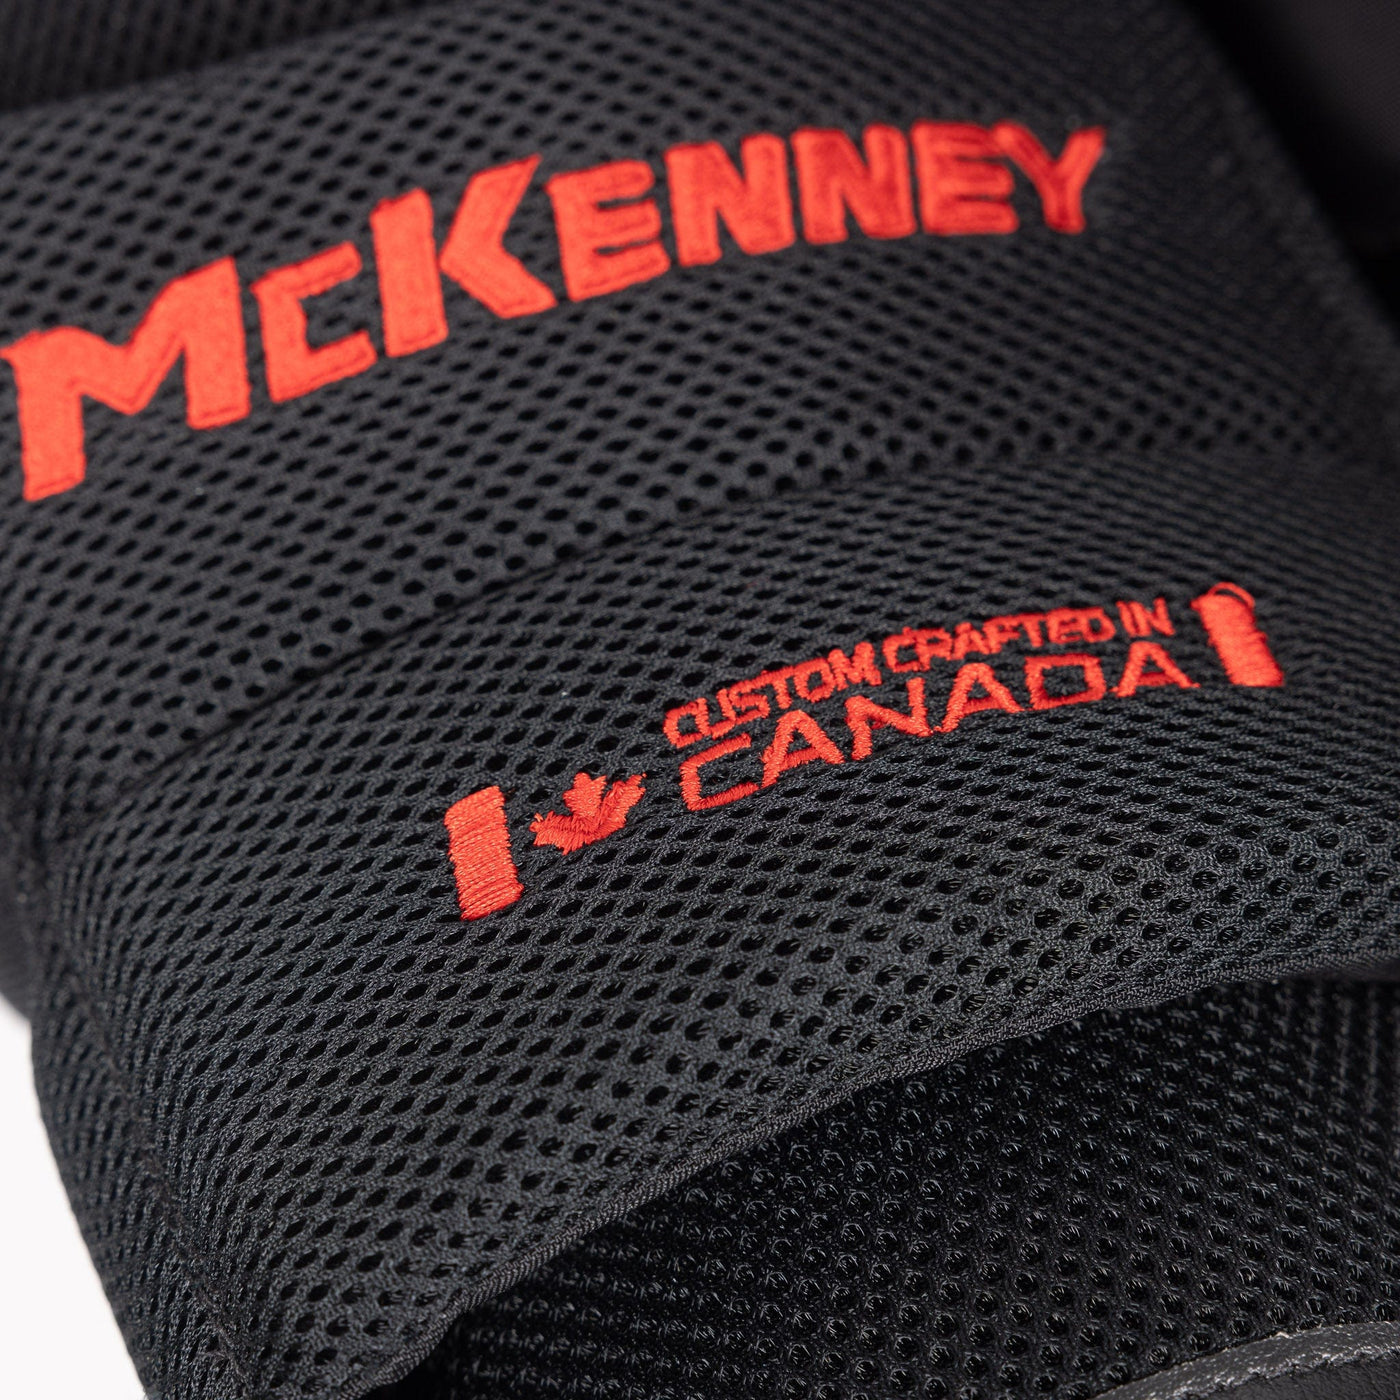 McKenney XPG2 Xtreme Pro Elite Senior Goalie Chest & Arm Protector - The Hockey Shop Source For Sports